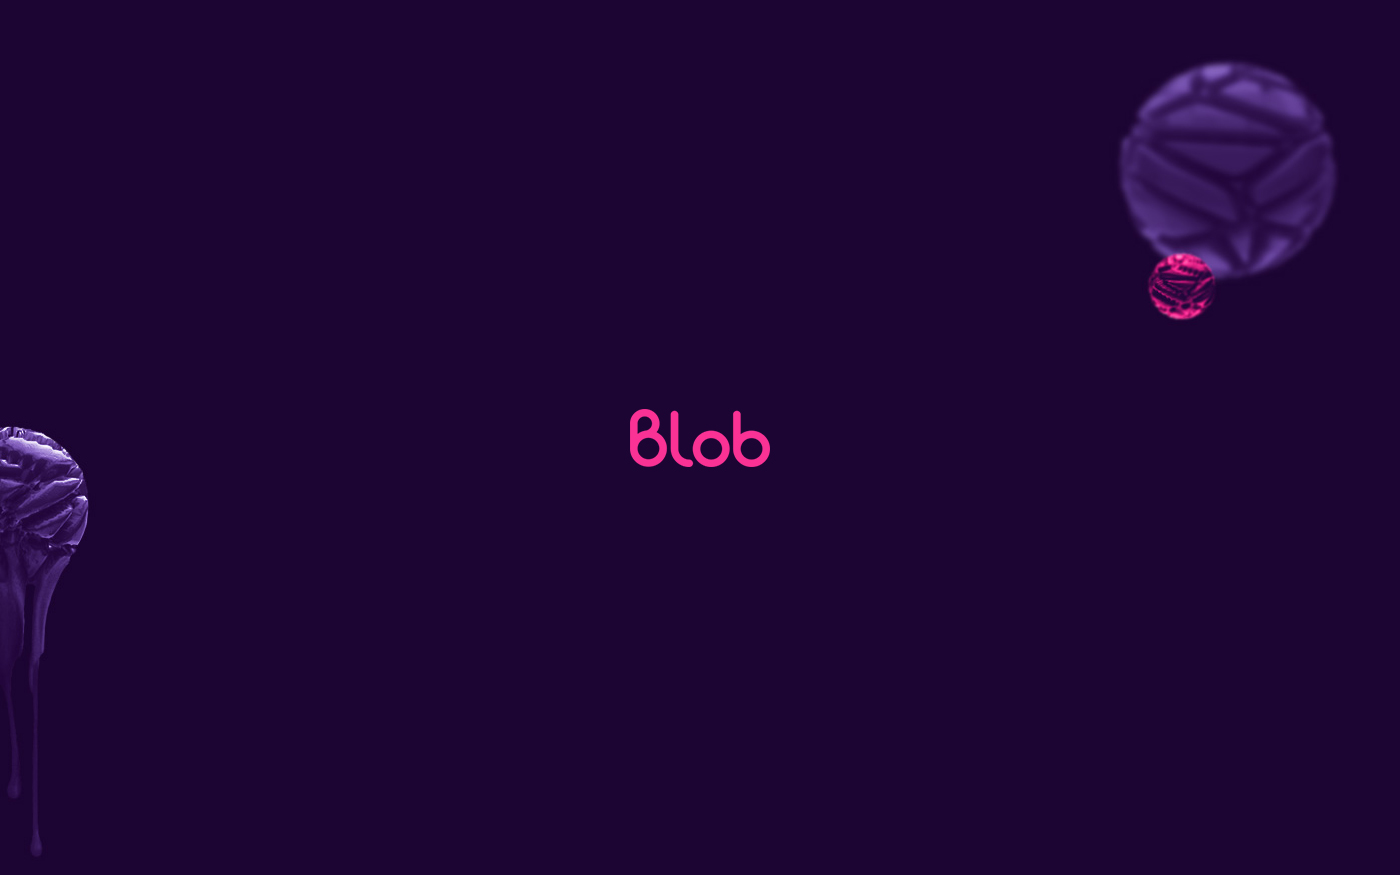 logo blob media identity corporate brand purple motion magenta Dynamic Website stationary